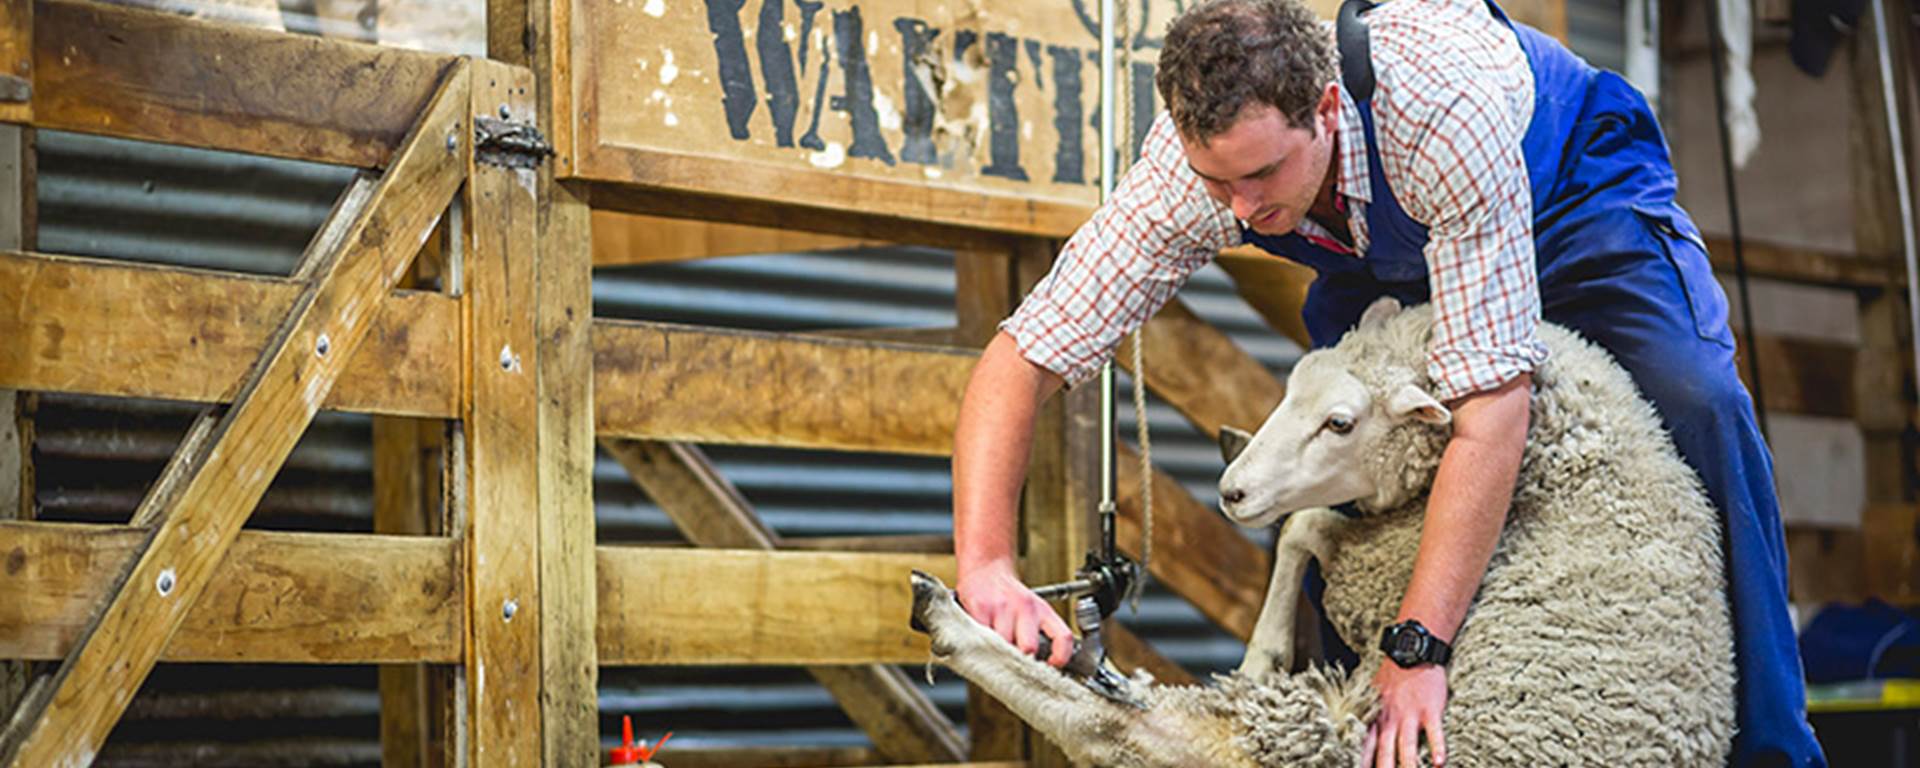 A farmer shears a sheep on stage at a farm show